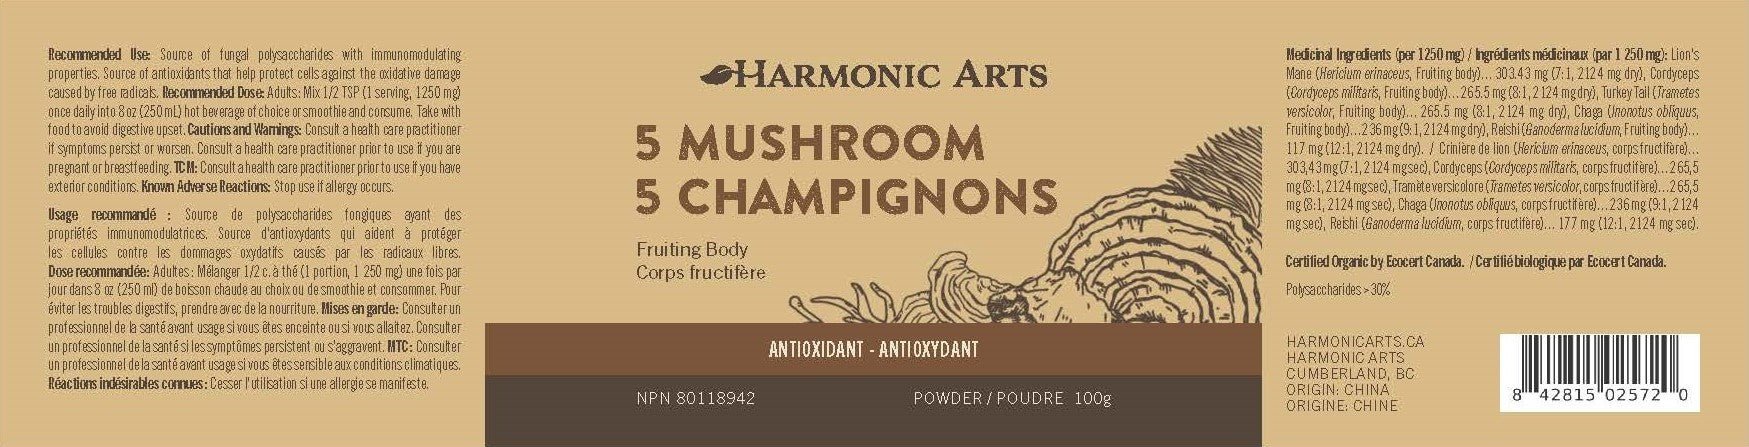 5 Mushroom Concentrated Powder - Harmonic Arts